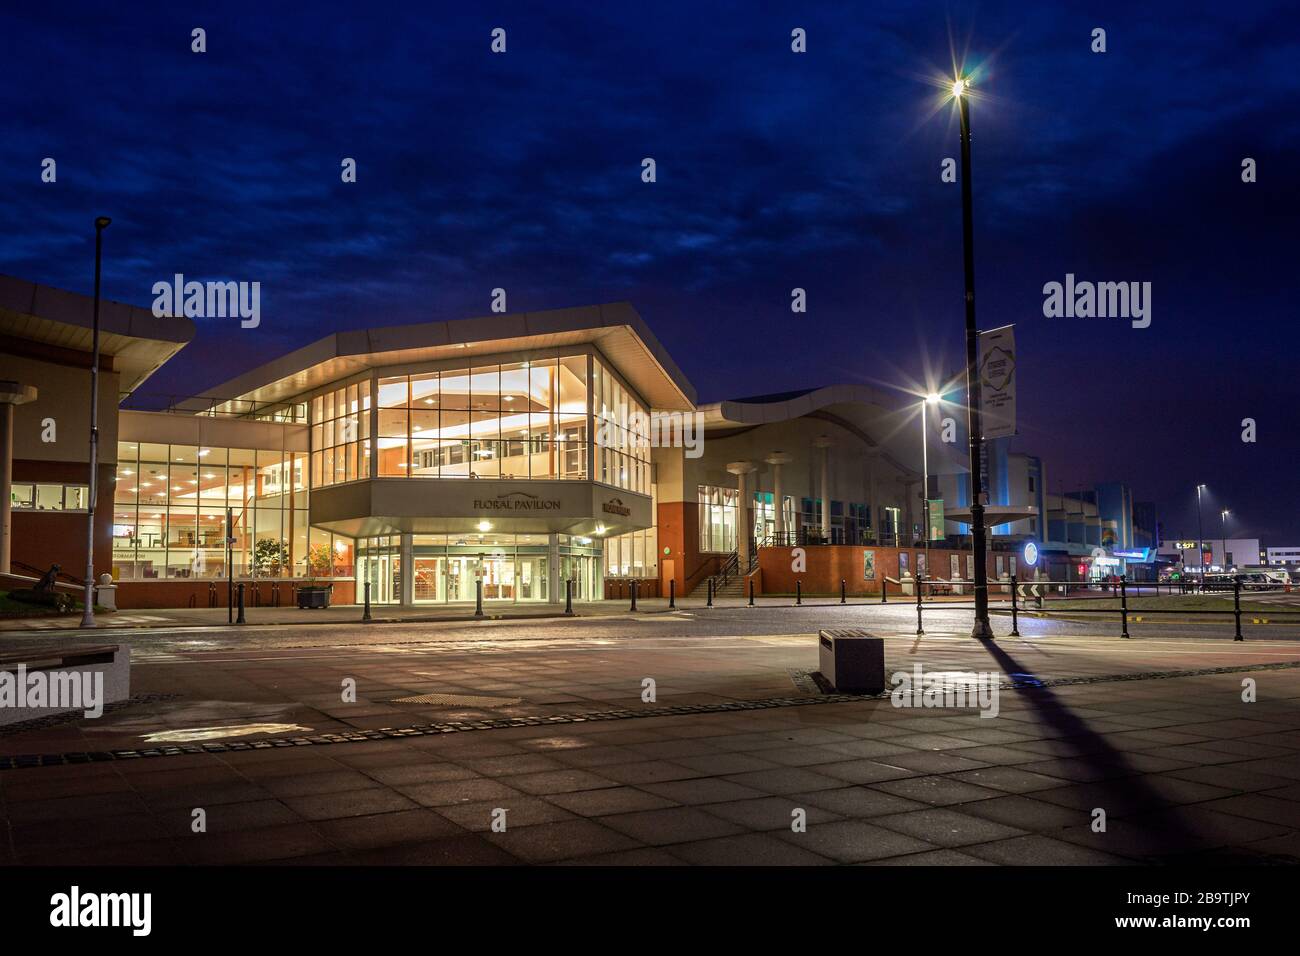 Night image of Floral Pavilion Theatre, New Brighton, Wallasey Stock Photo